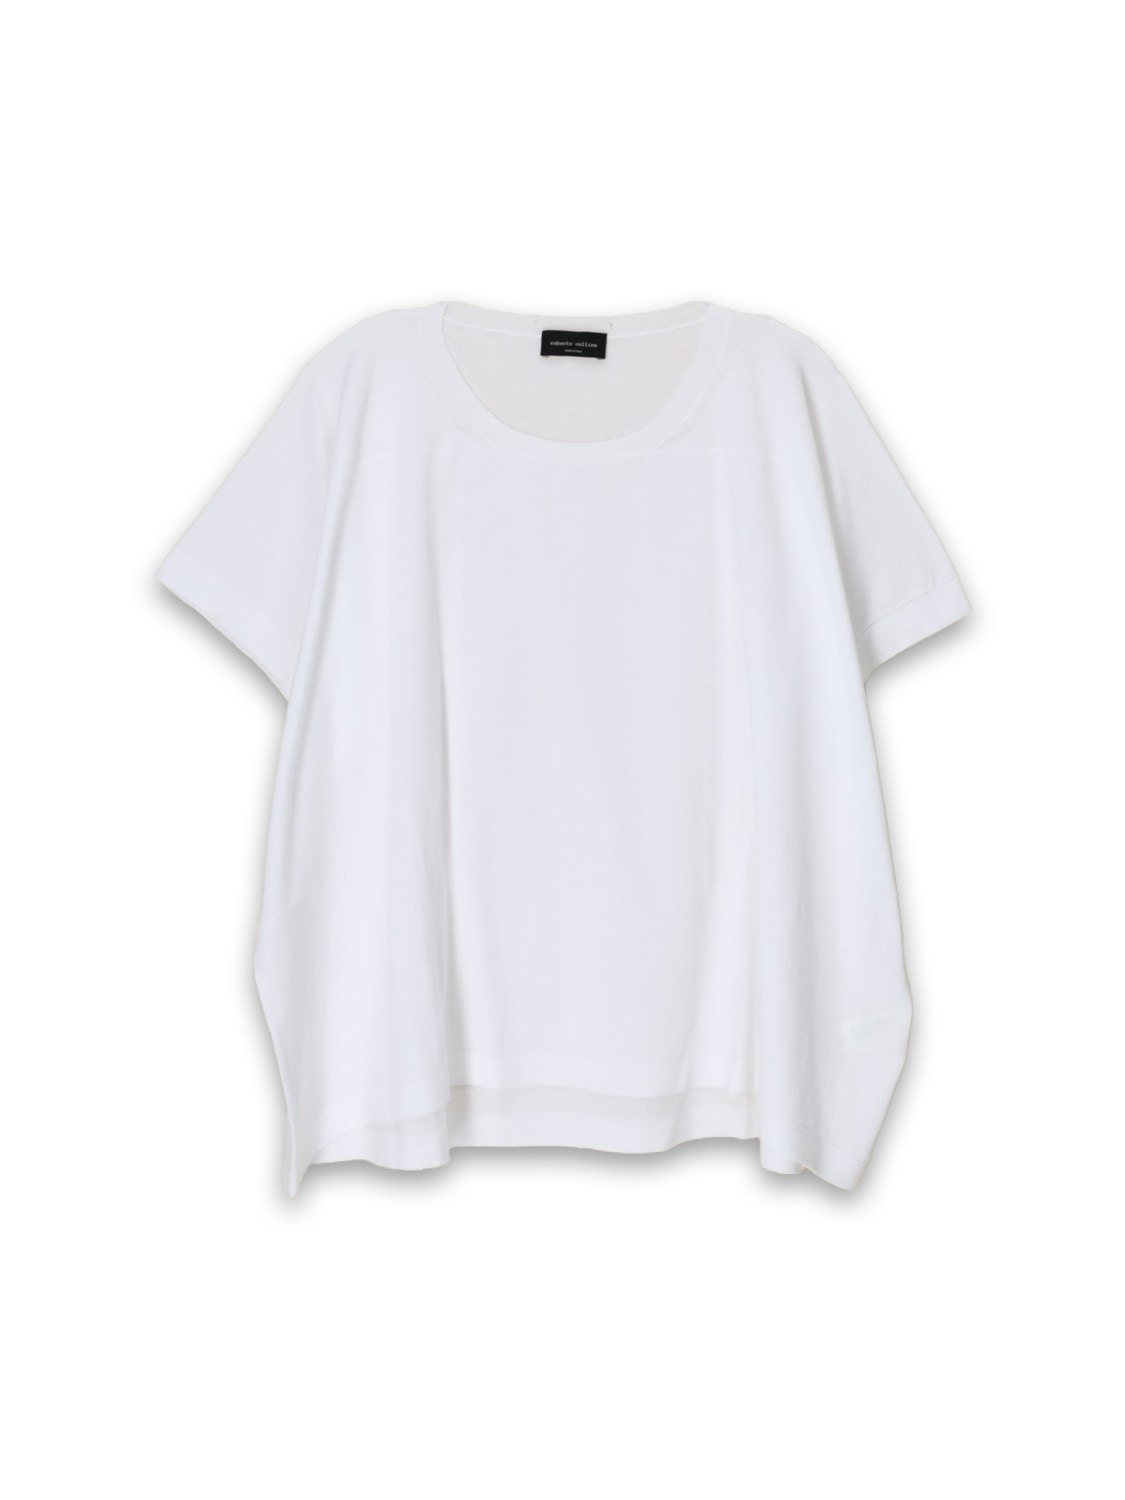 Oversized Feinstrick-Shirt aus Baumwolle   